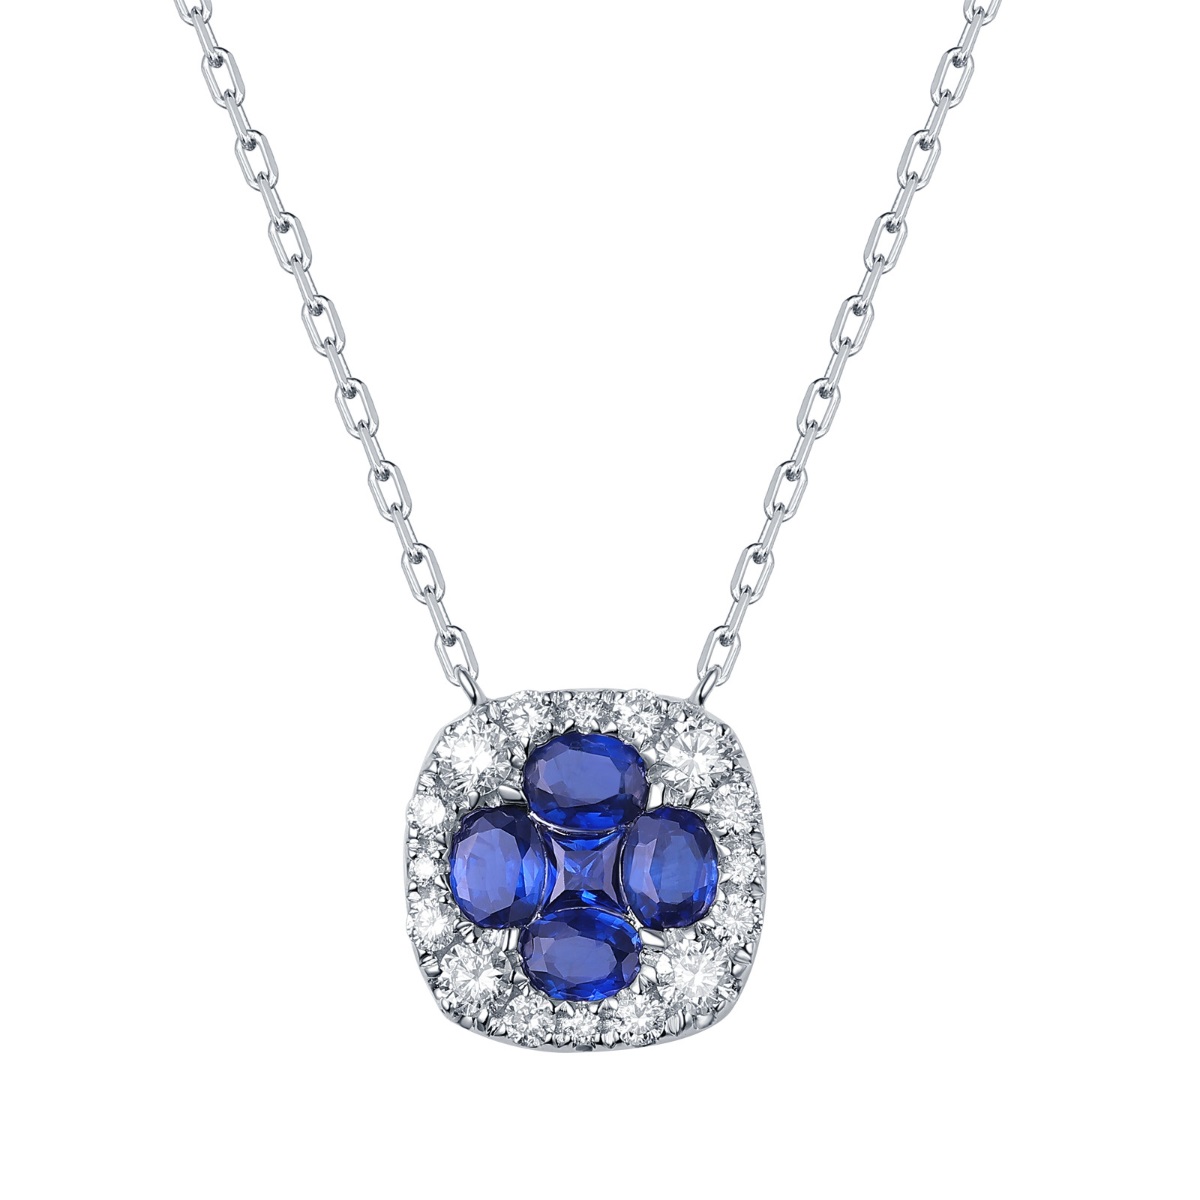 NL36406BSA – 18K White Gold  Diamond and Gemstone Necklace, 1.39 TCW